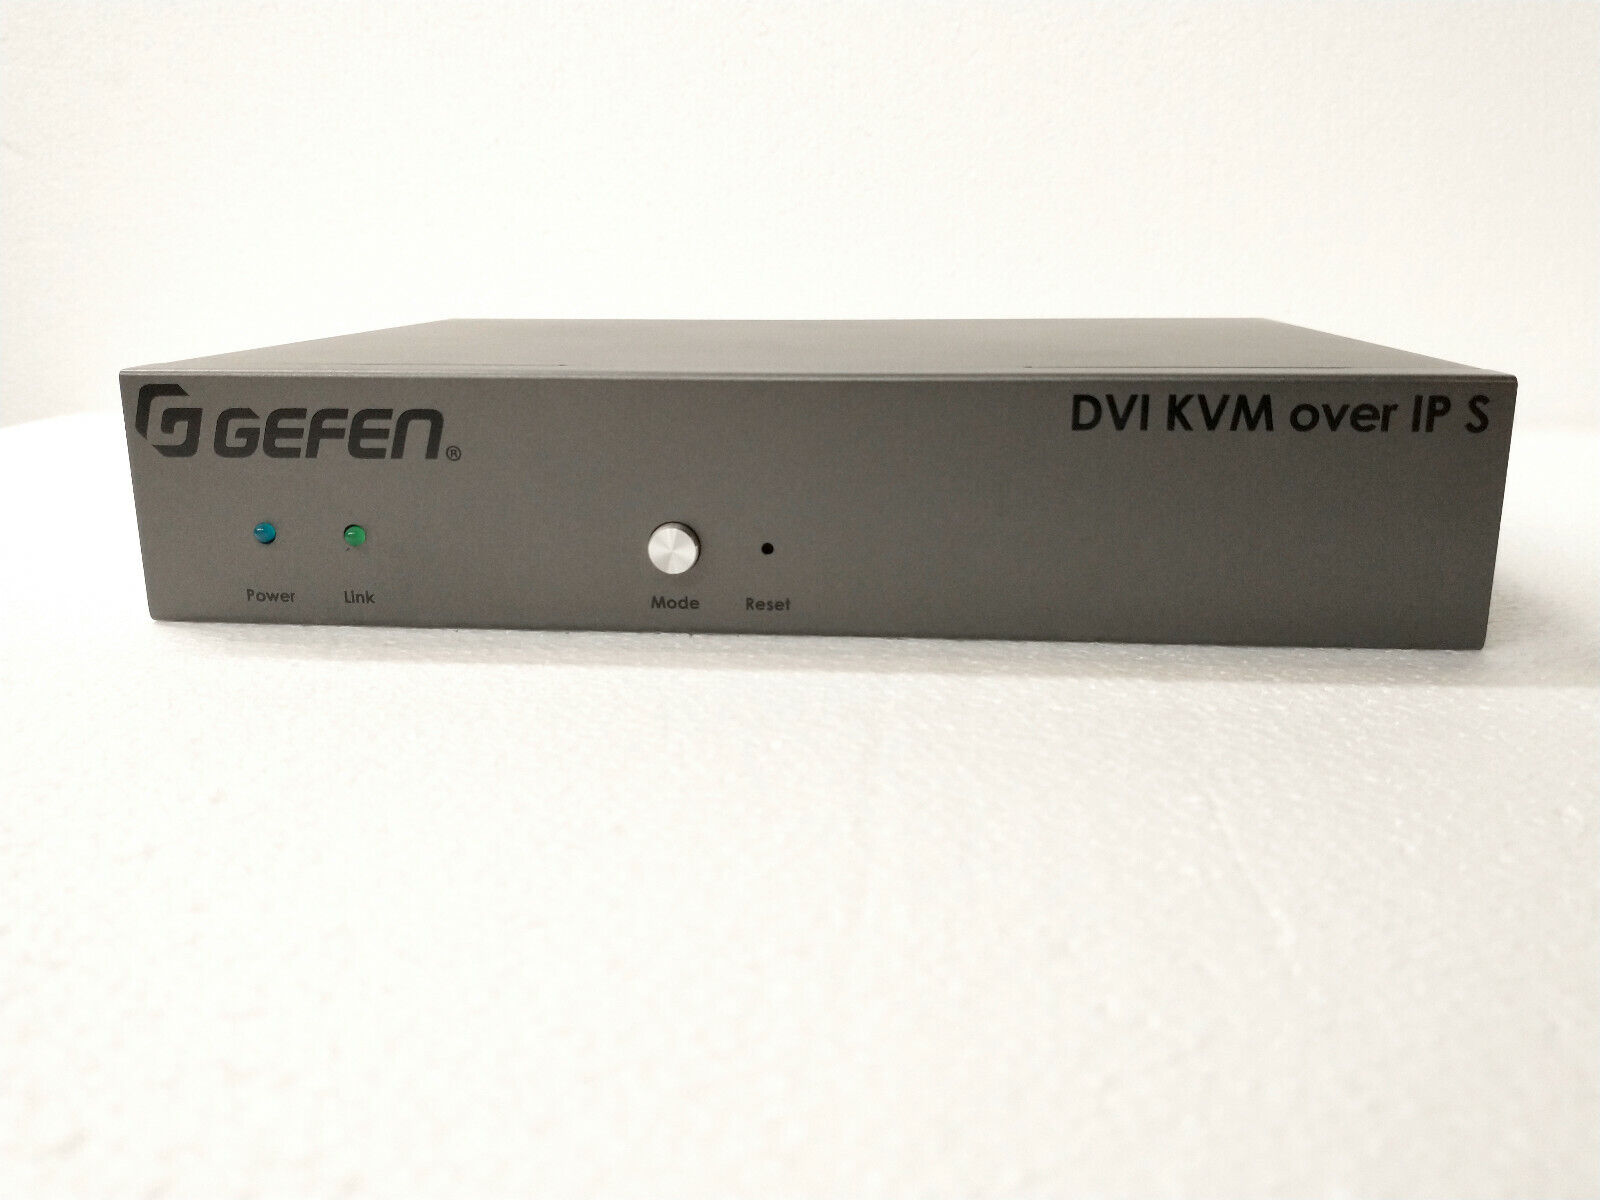 Gefen DVI KVM Over IP Sender EXT-DVIKVM-LANTX with power cord included